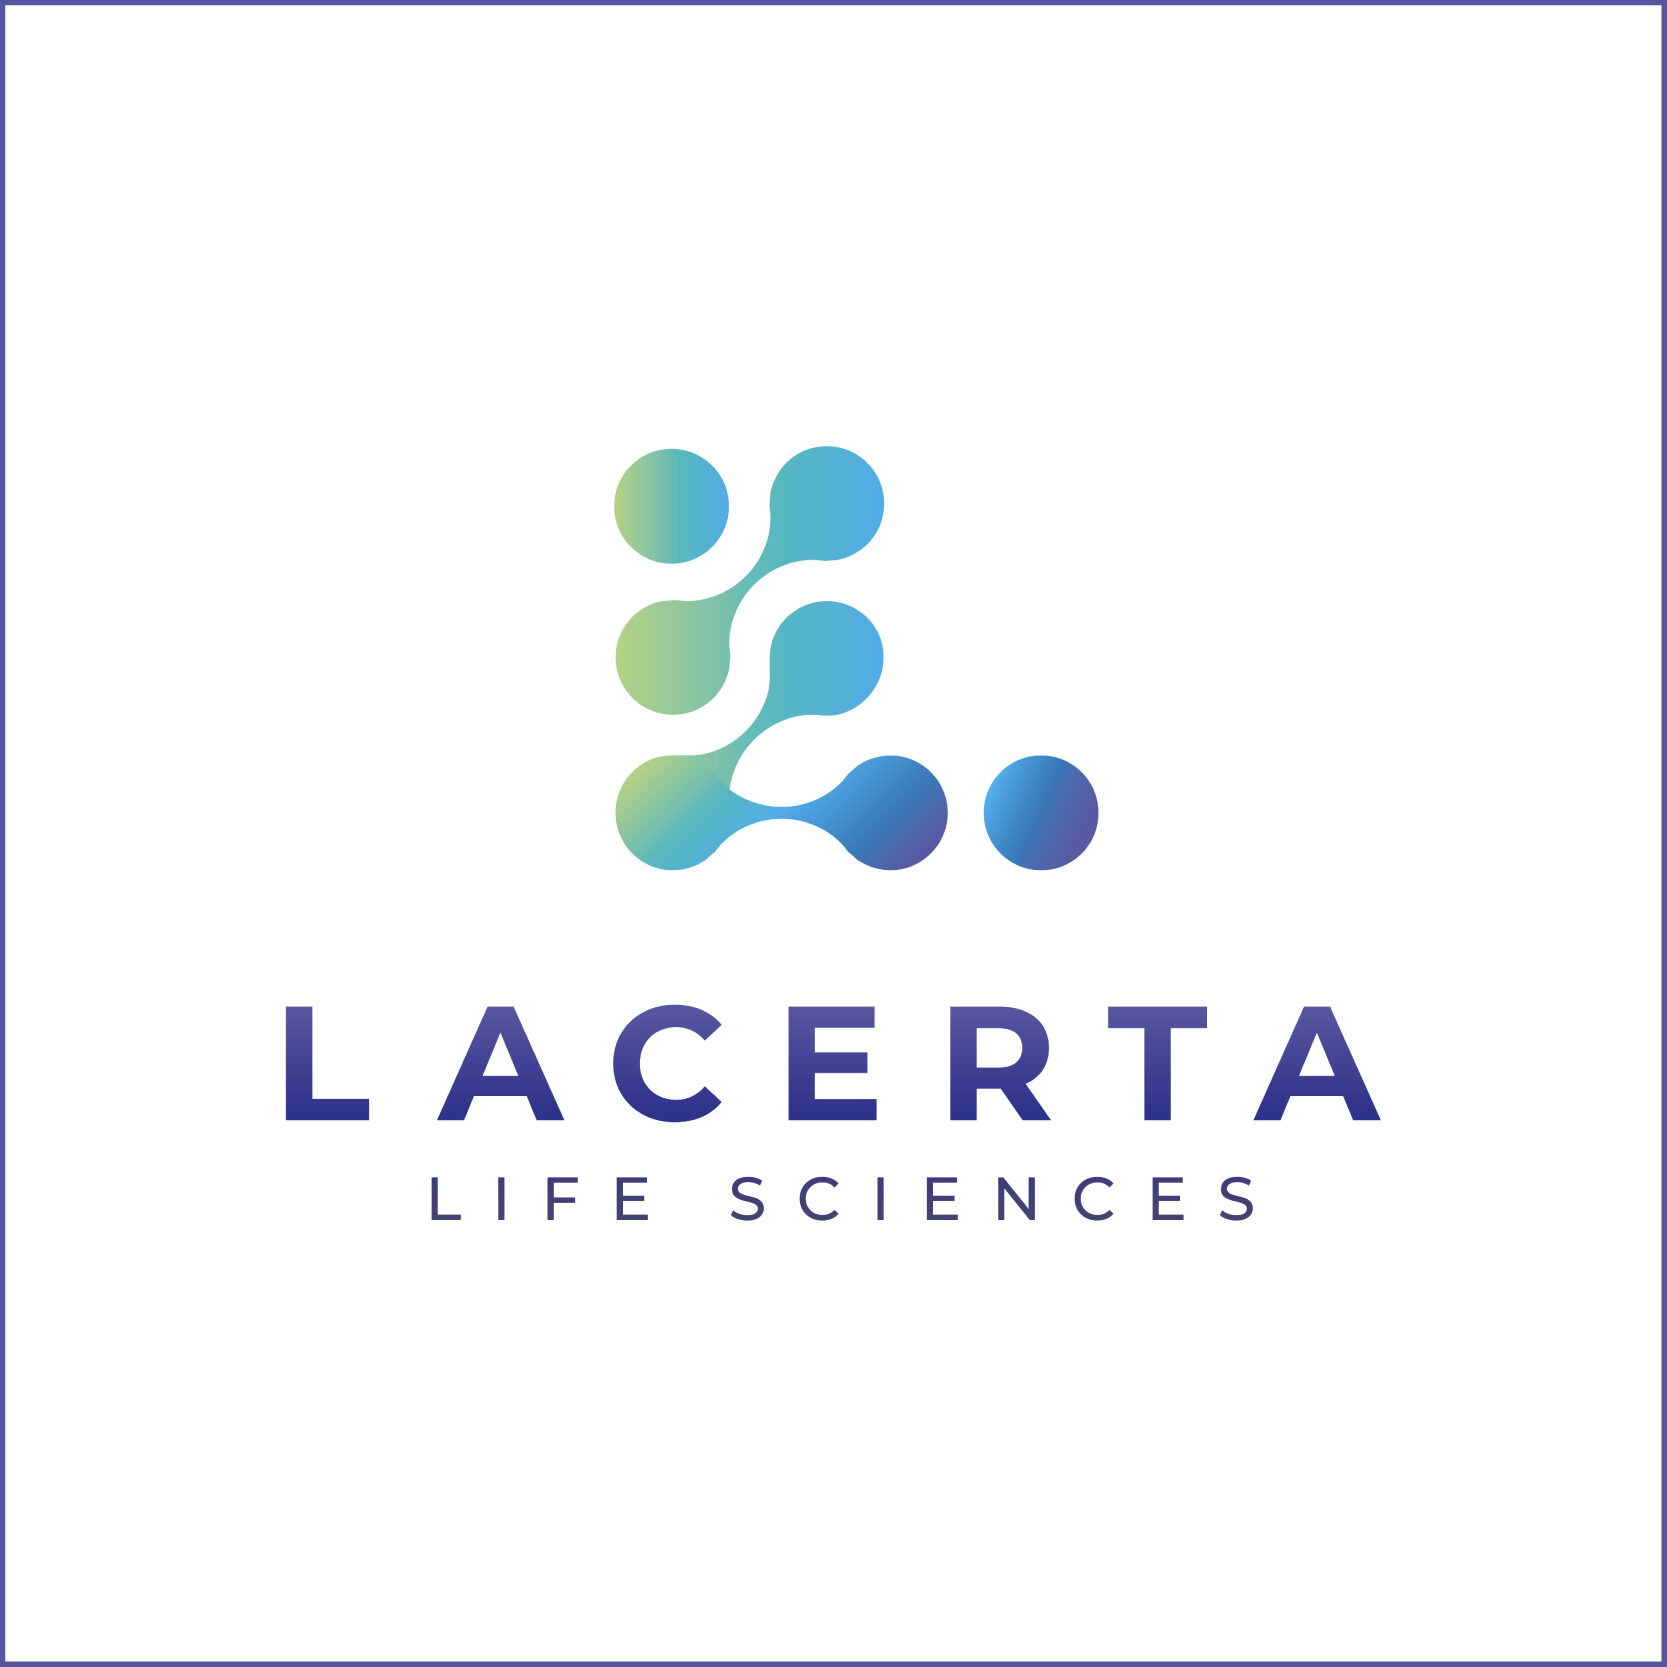 Lacerta Life Sciences | SnapMe Creative